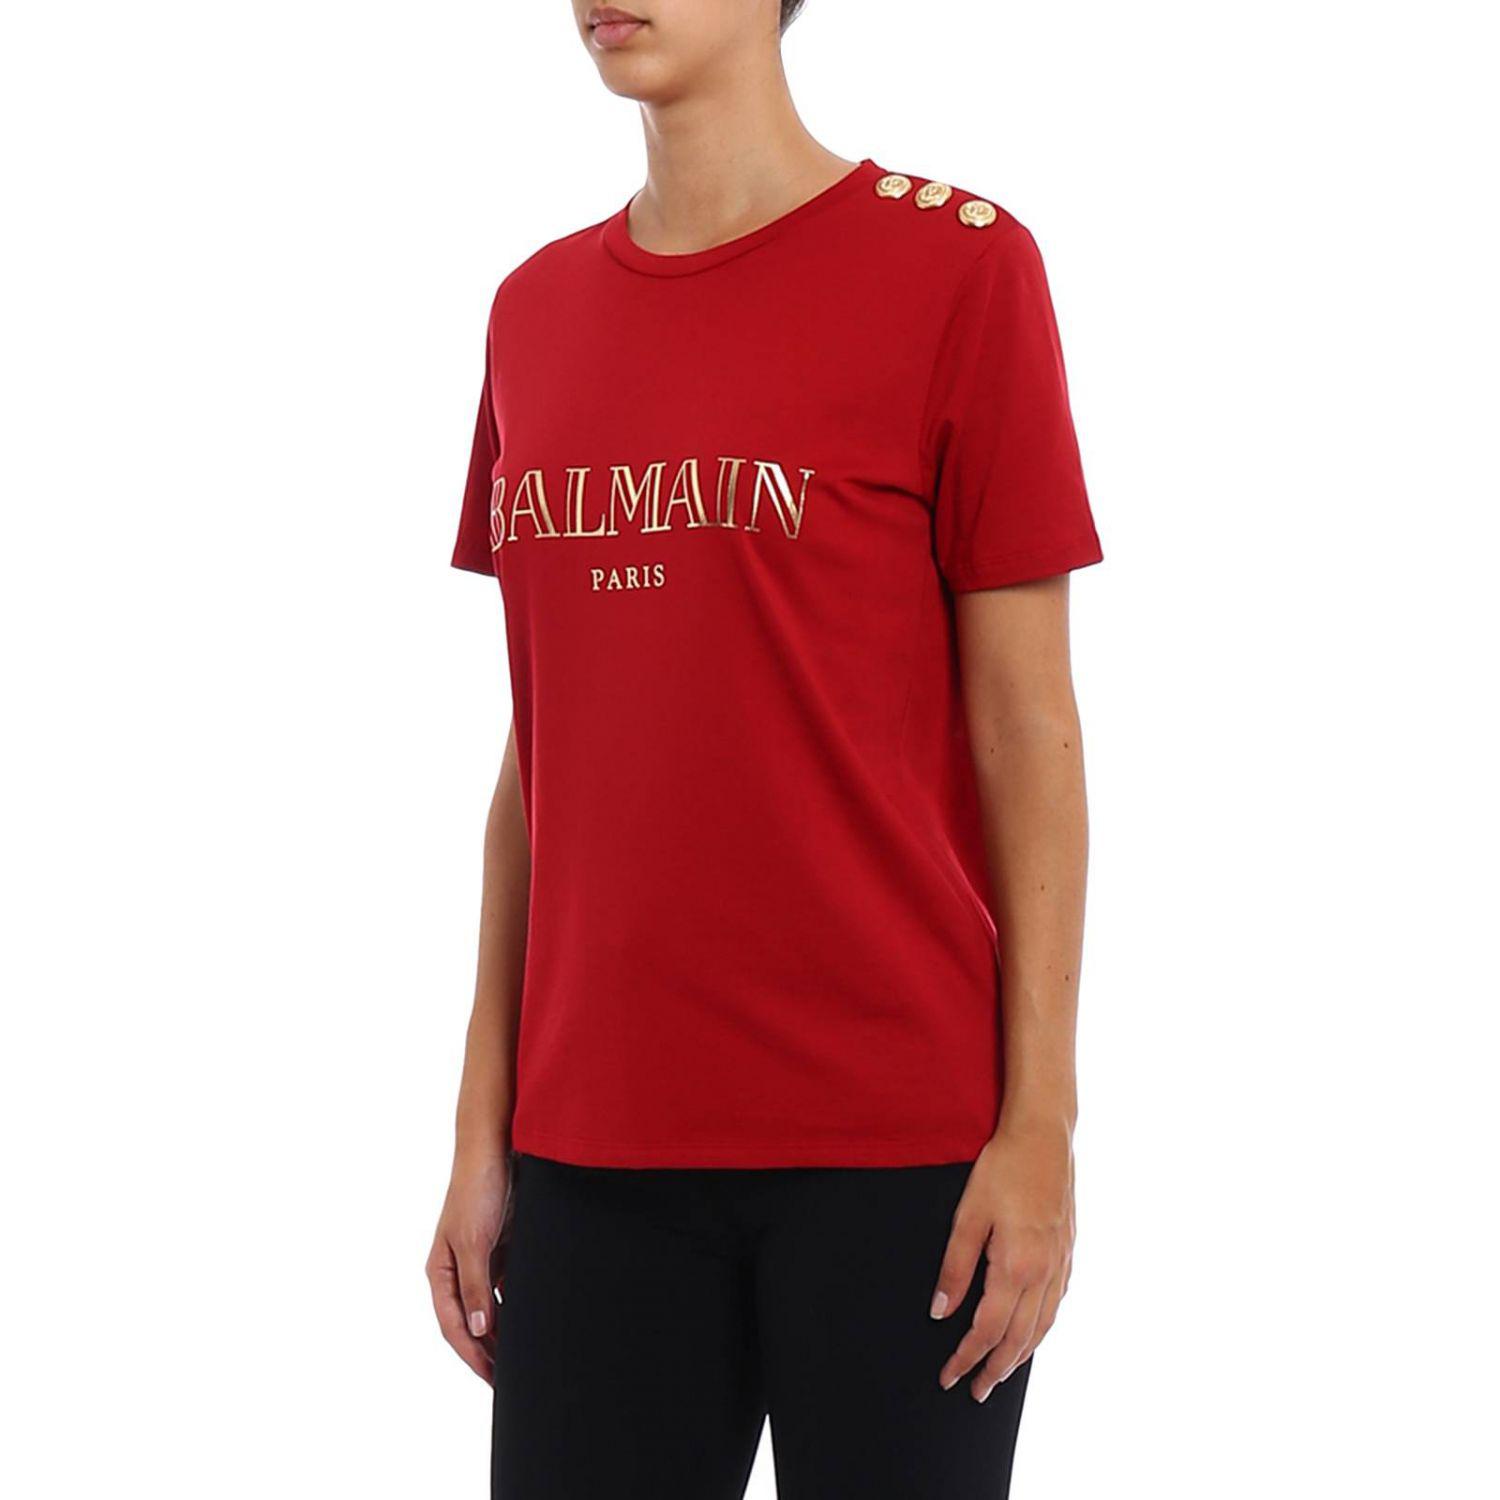 Lyst - Balmain T-shirt Women in Red